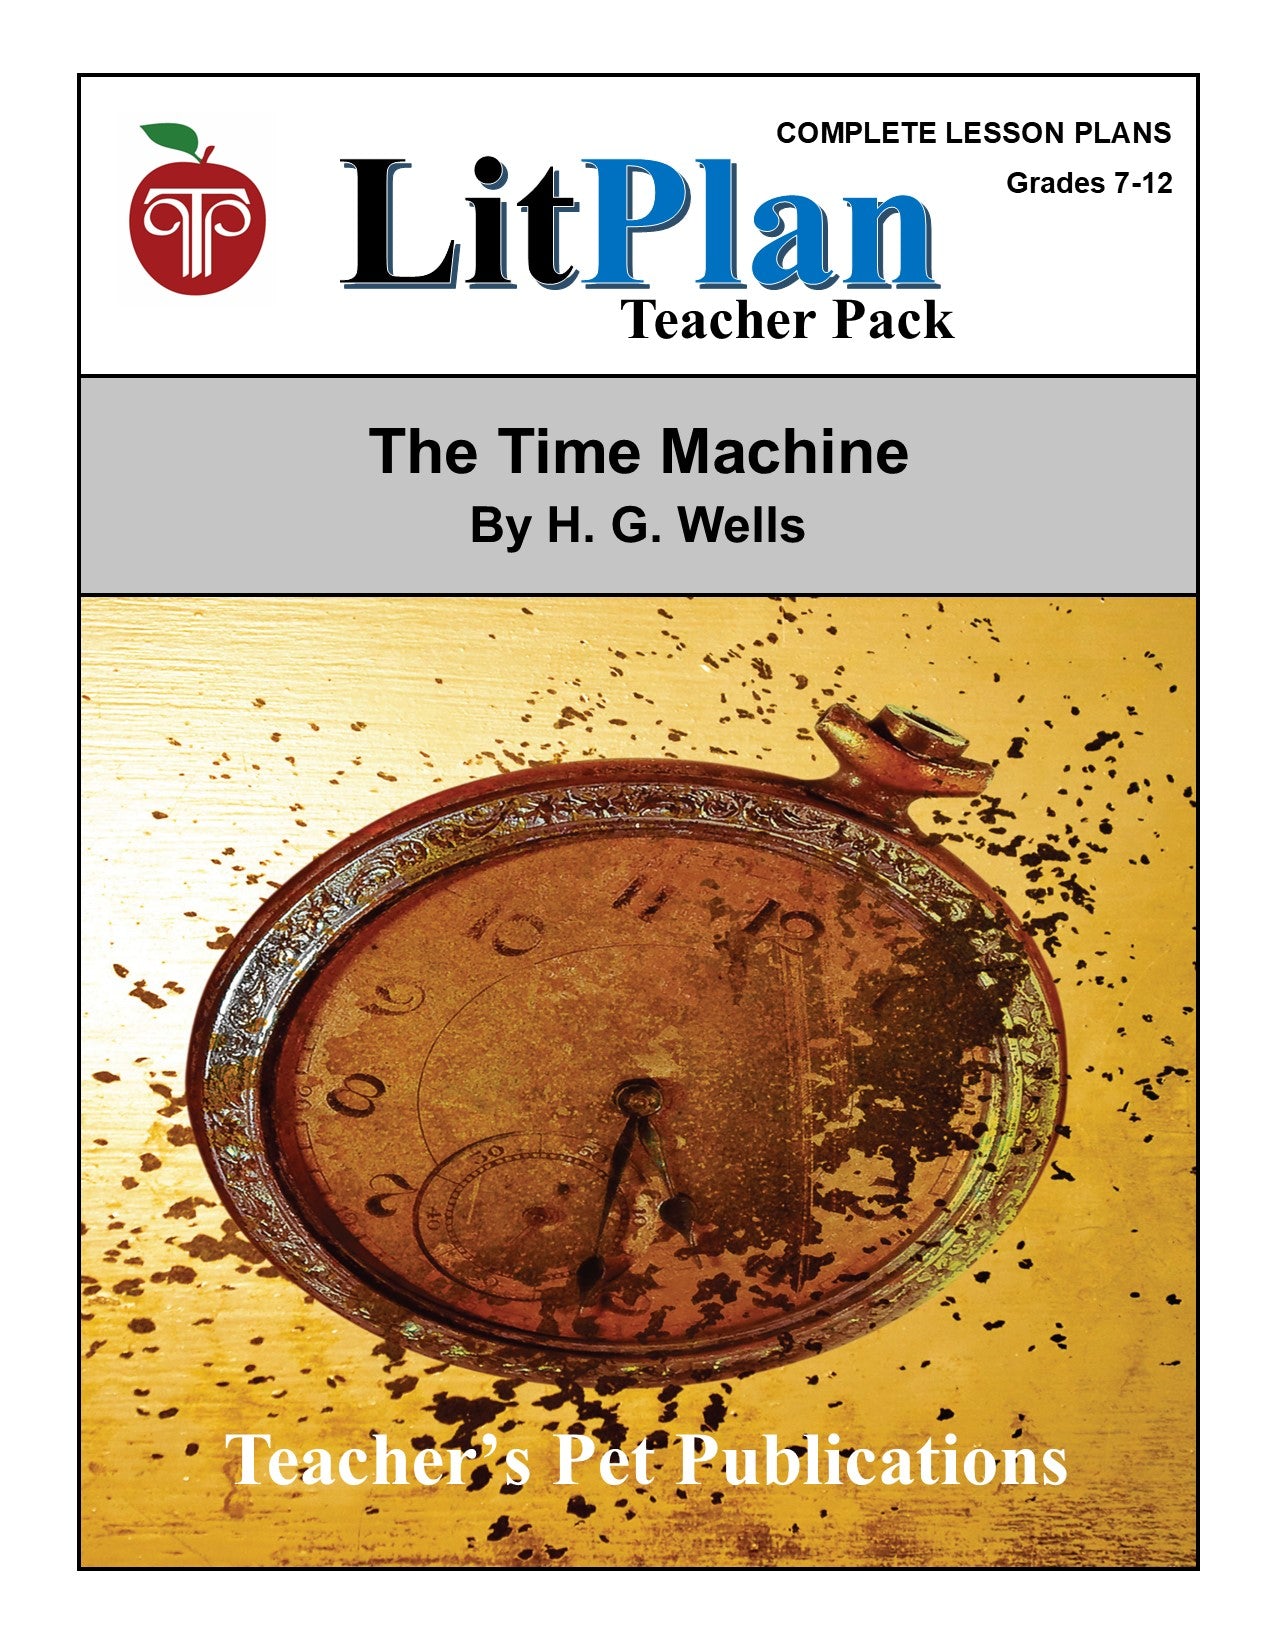 The Time Machine: LitPlan Teacher Pack Grades 7-12